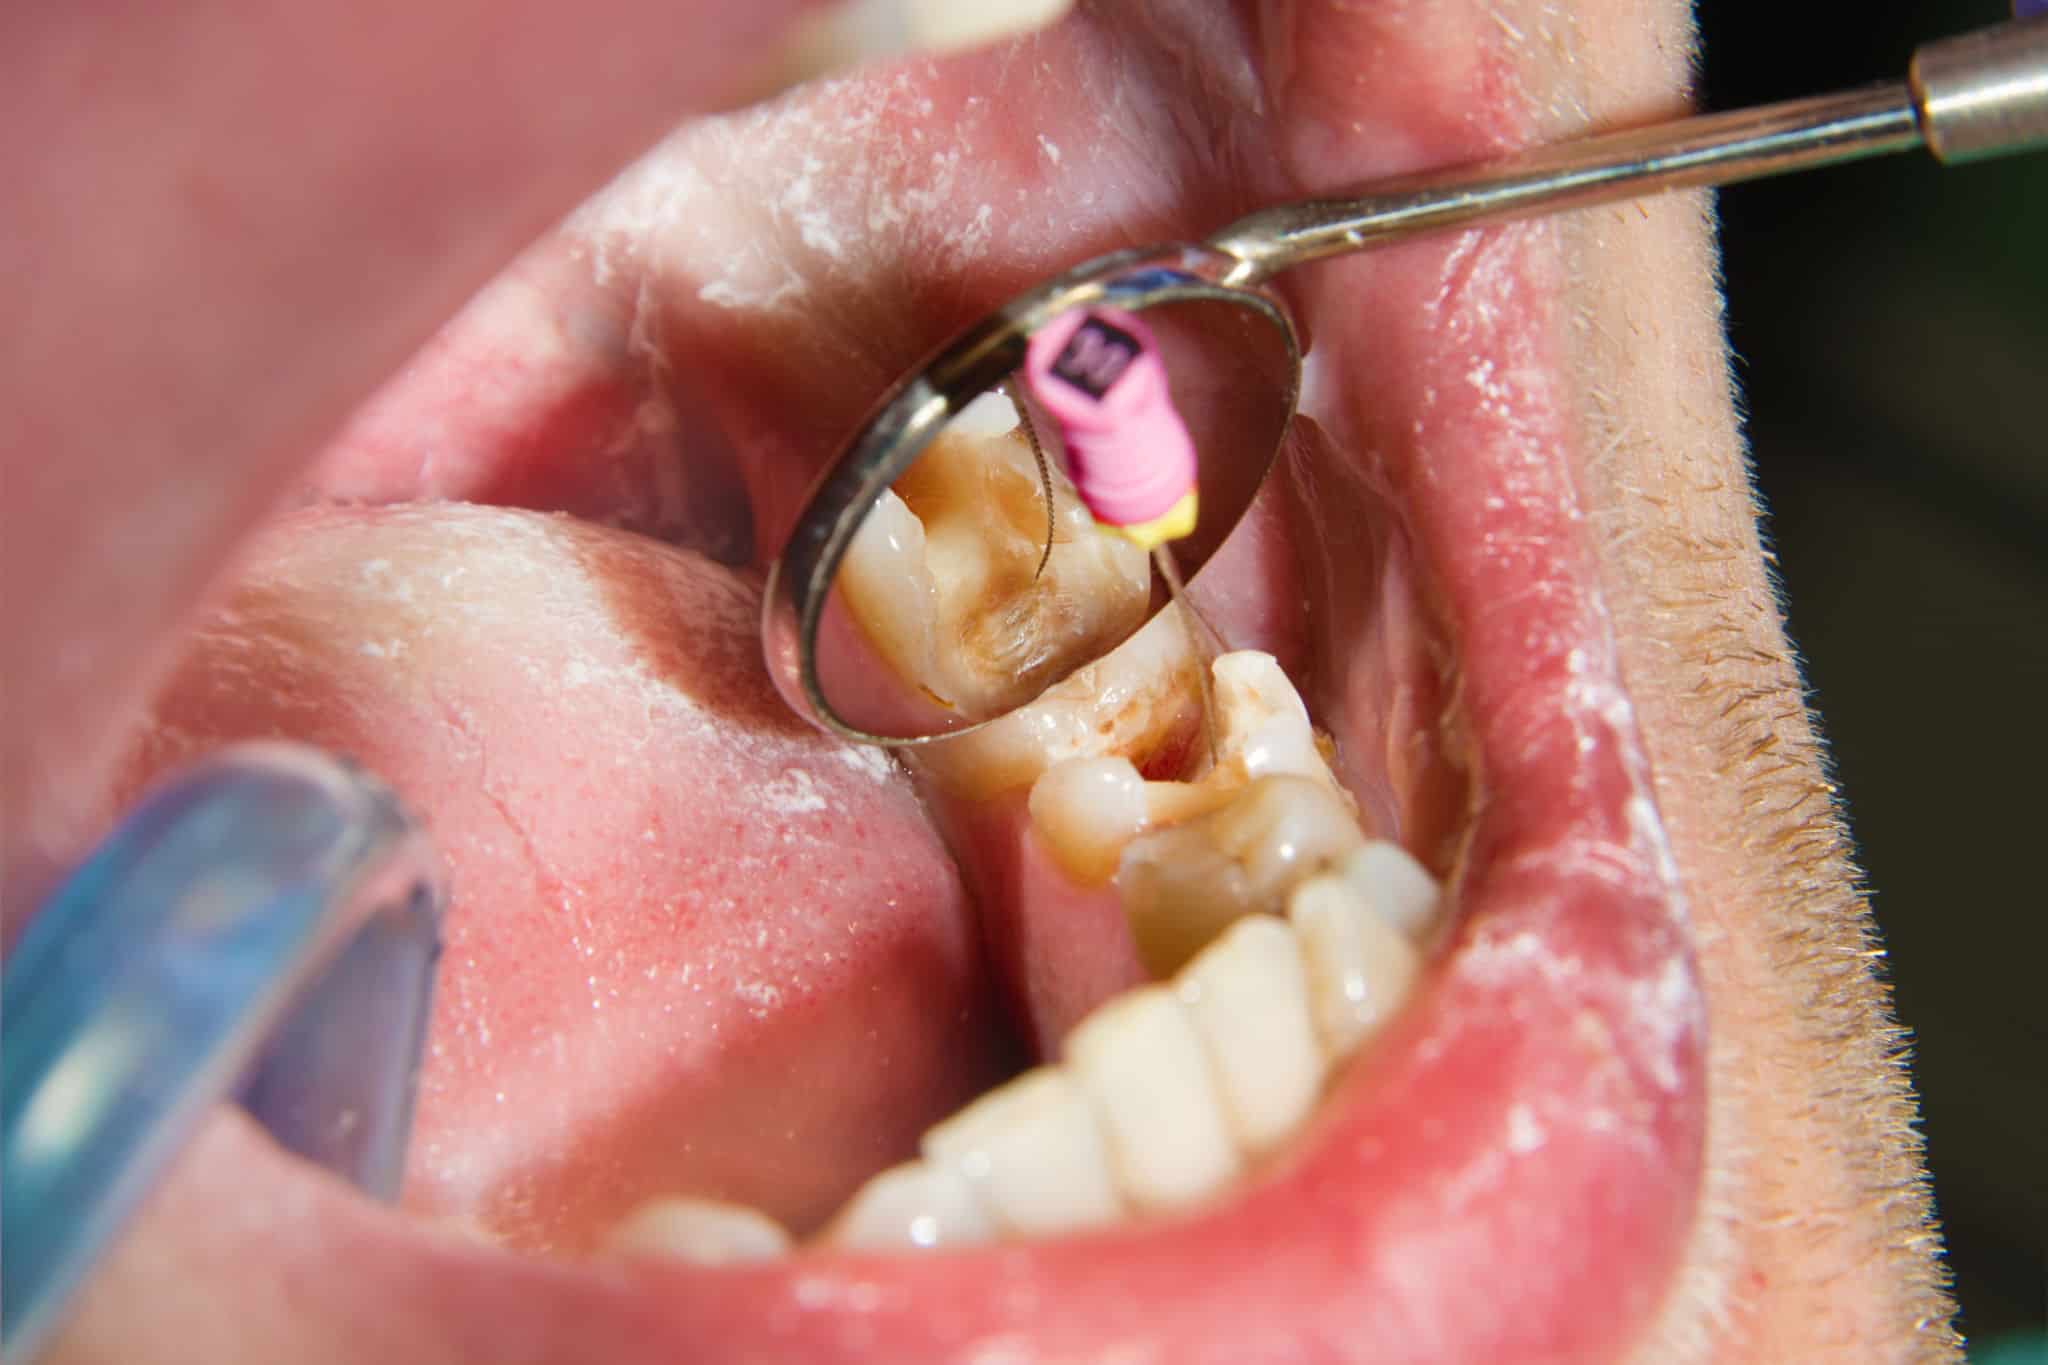 Closeup of root canal procedure